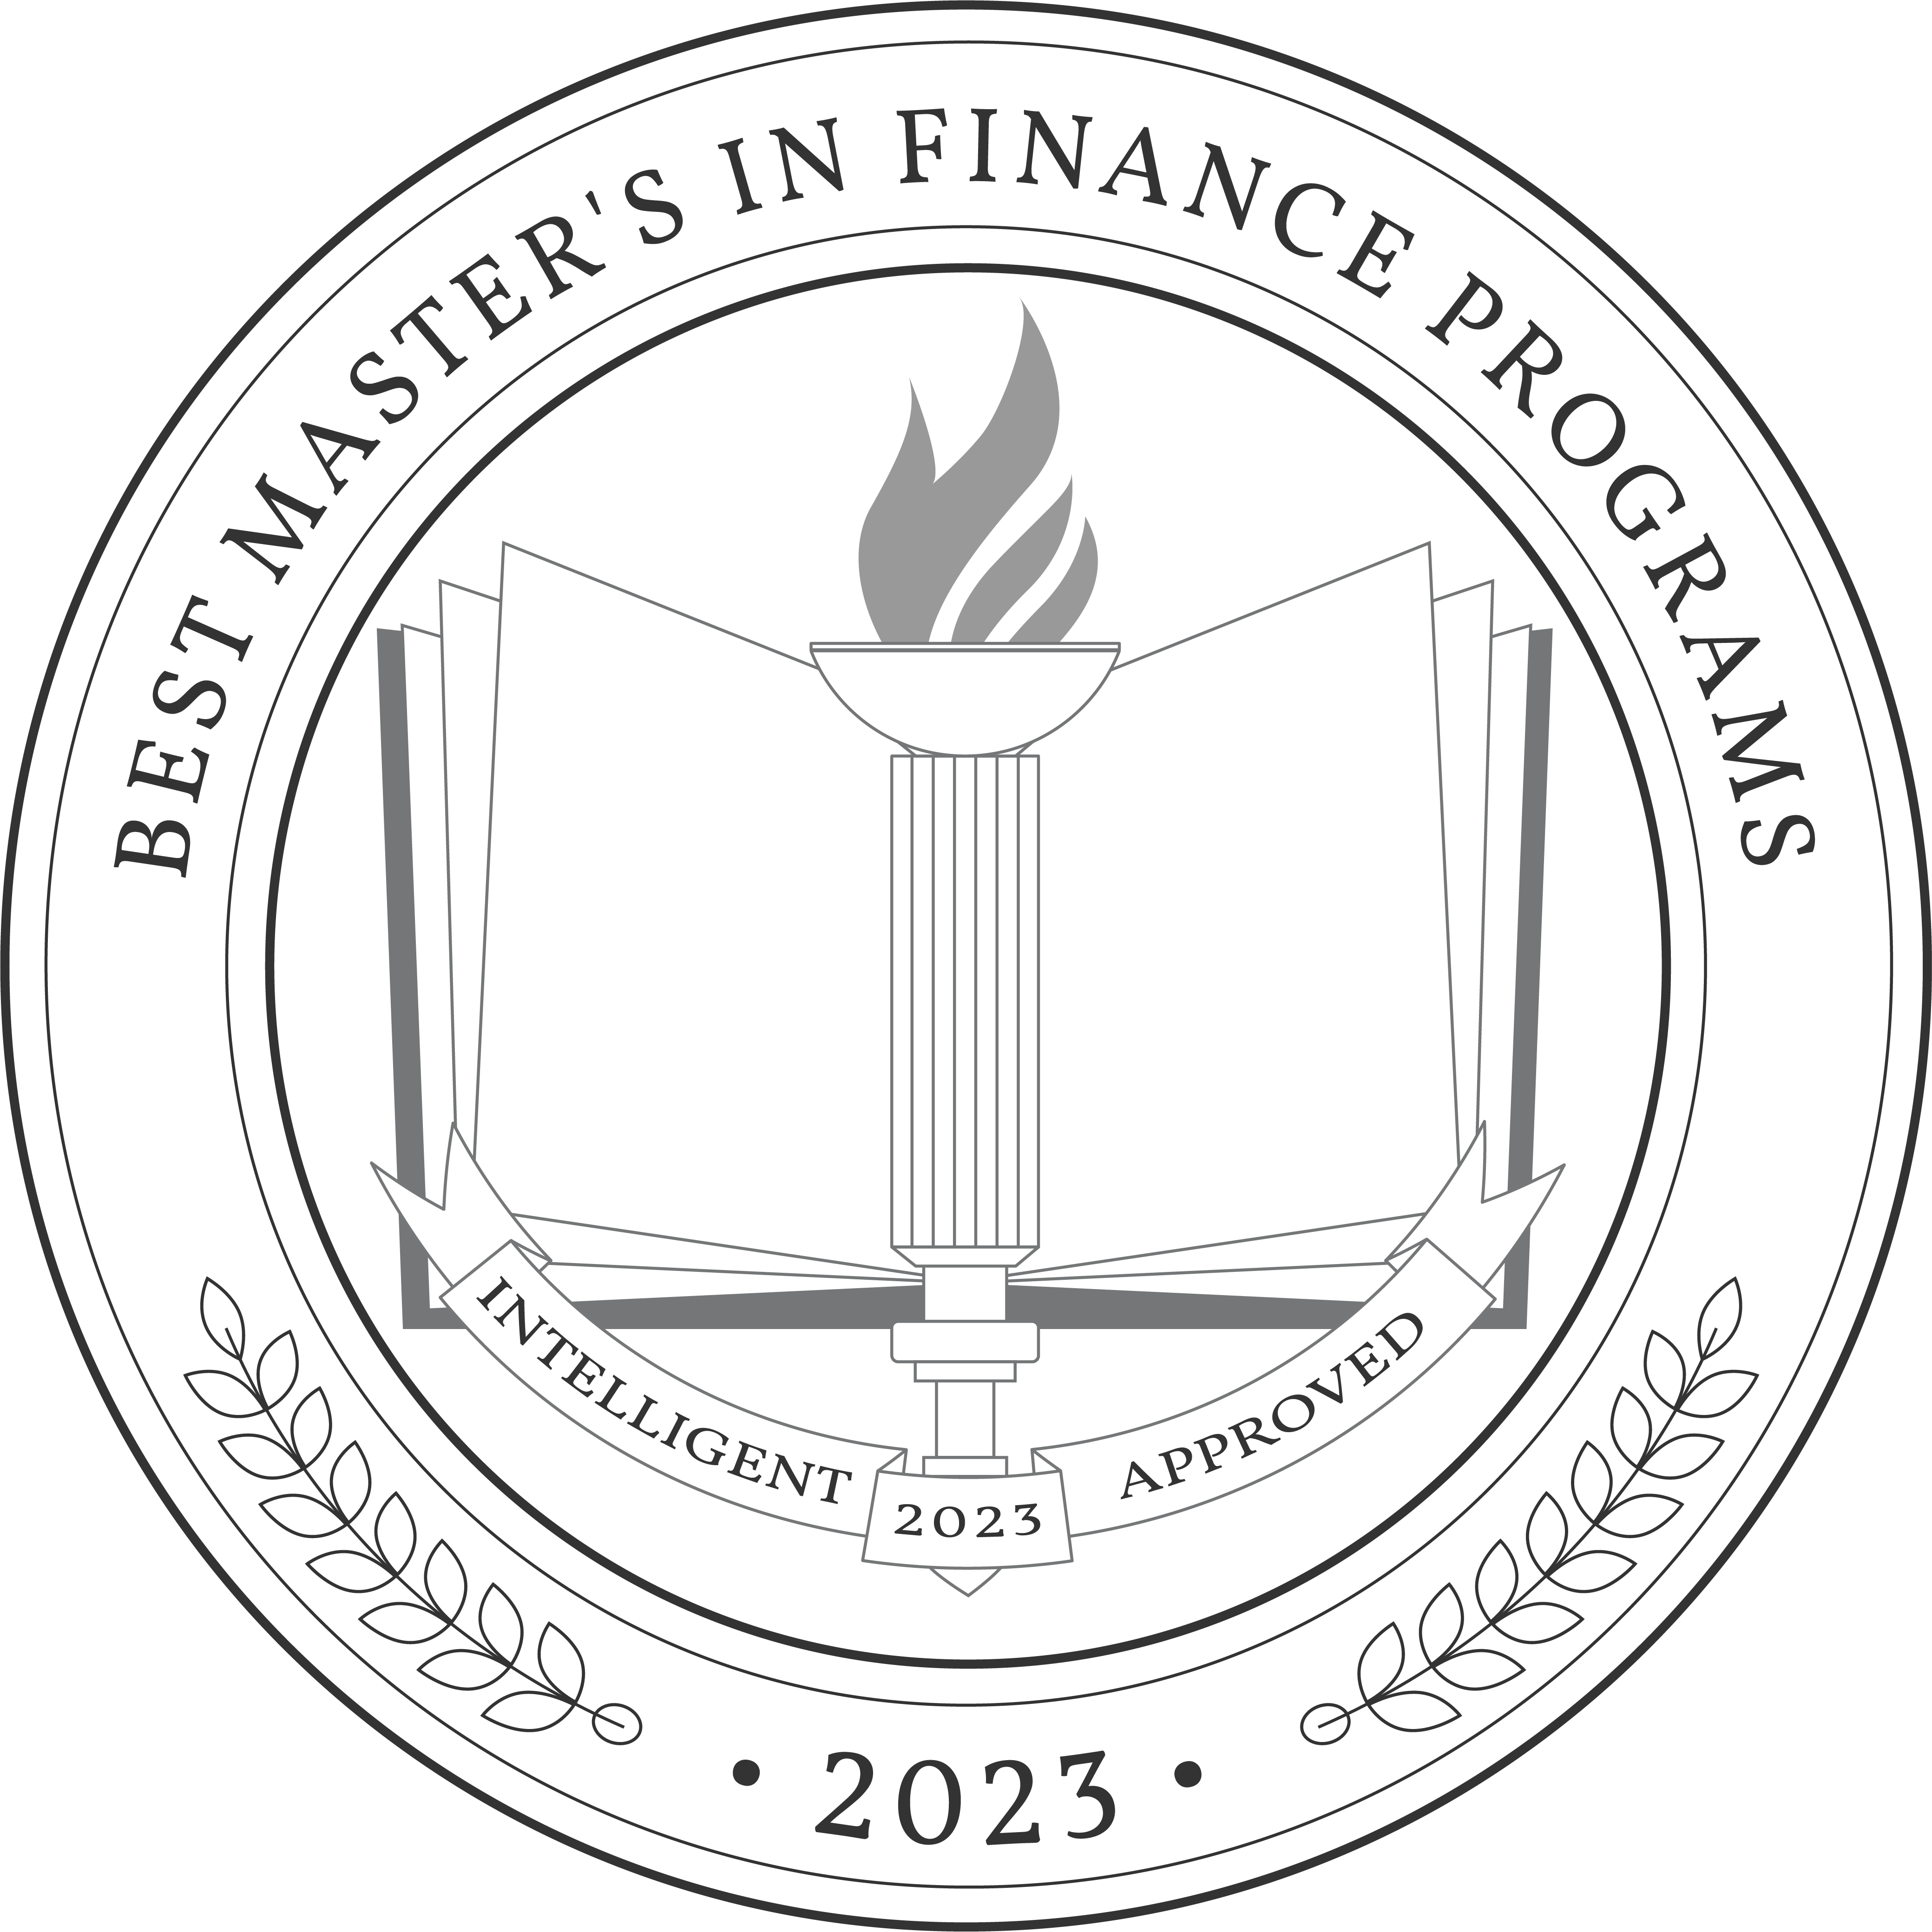 Best Master's in Finance Programs 2023